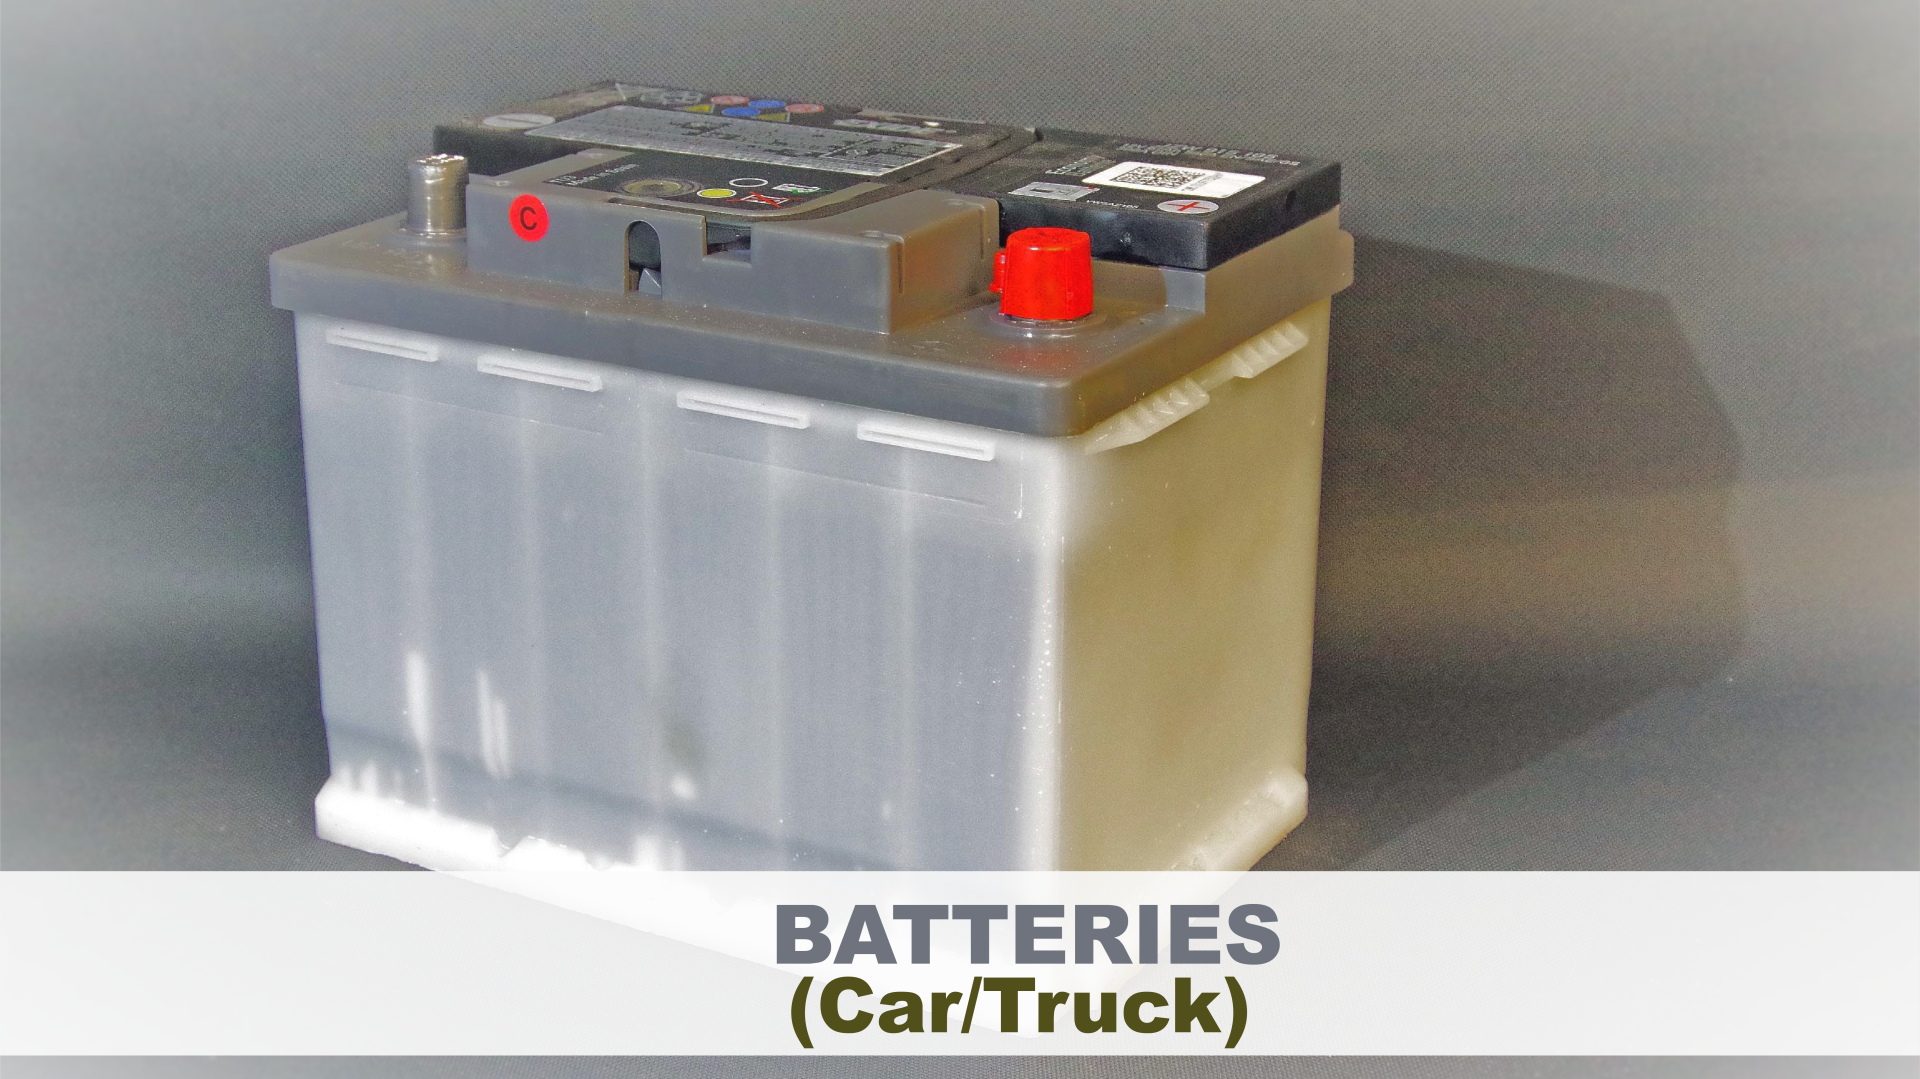 Recycling Car/Truck Batteries